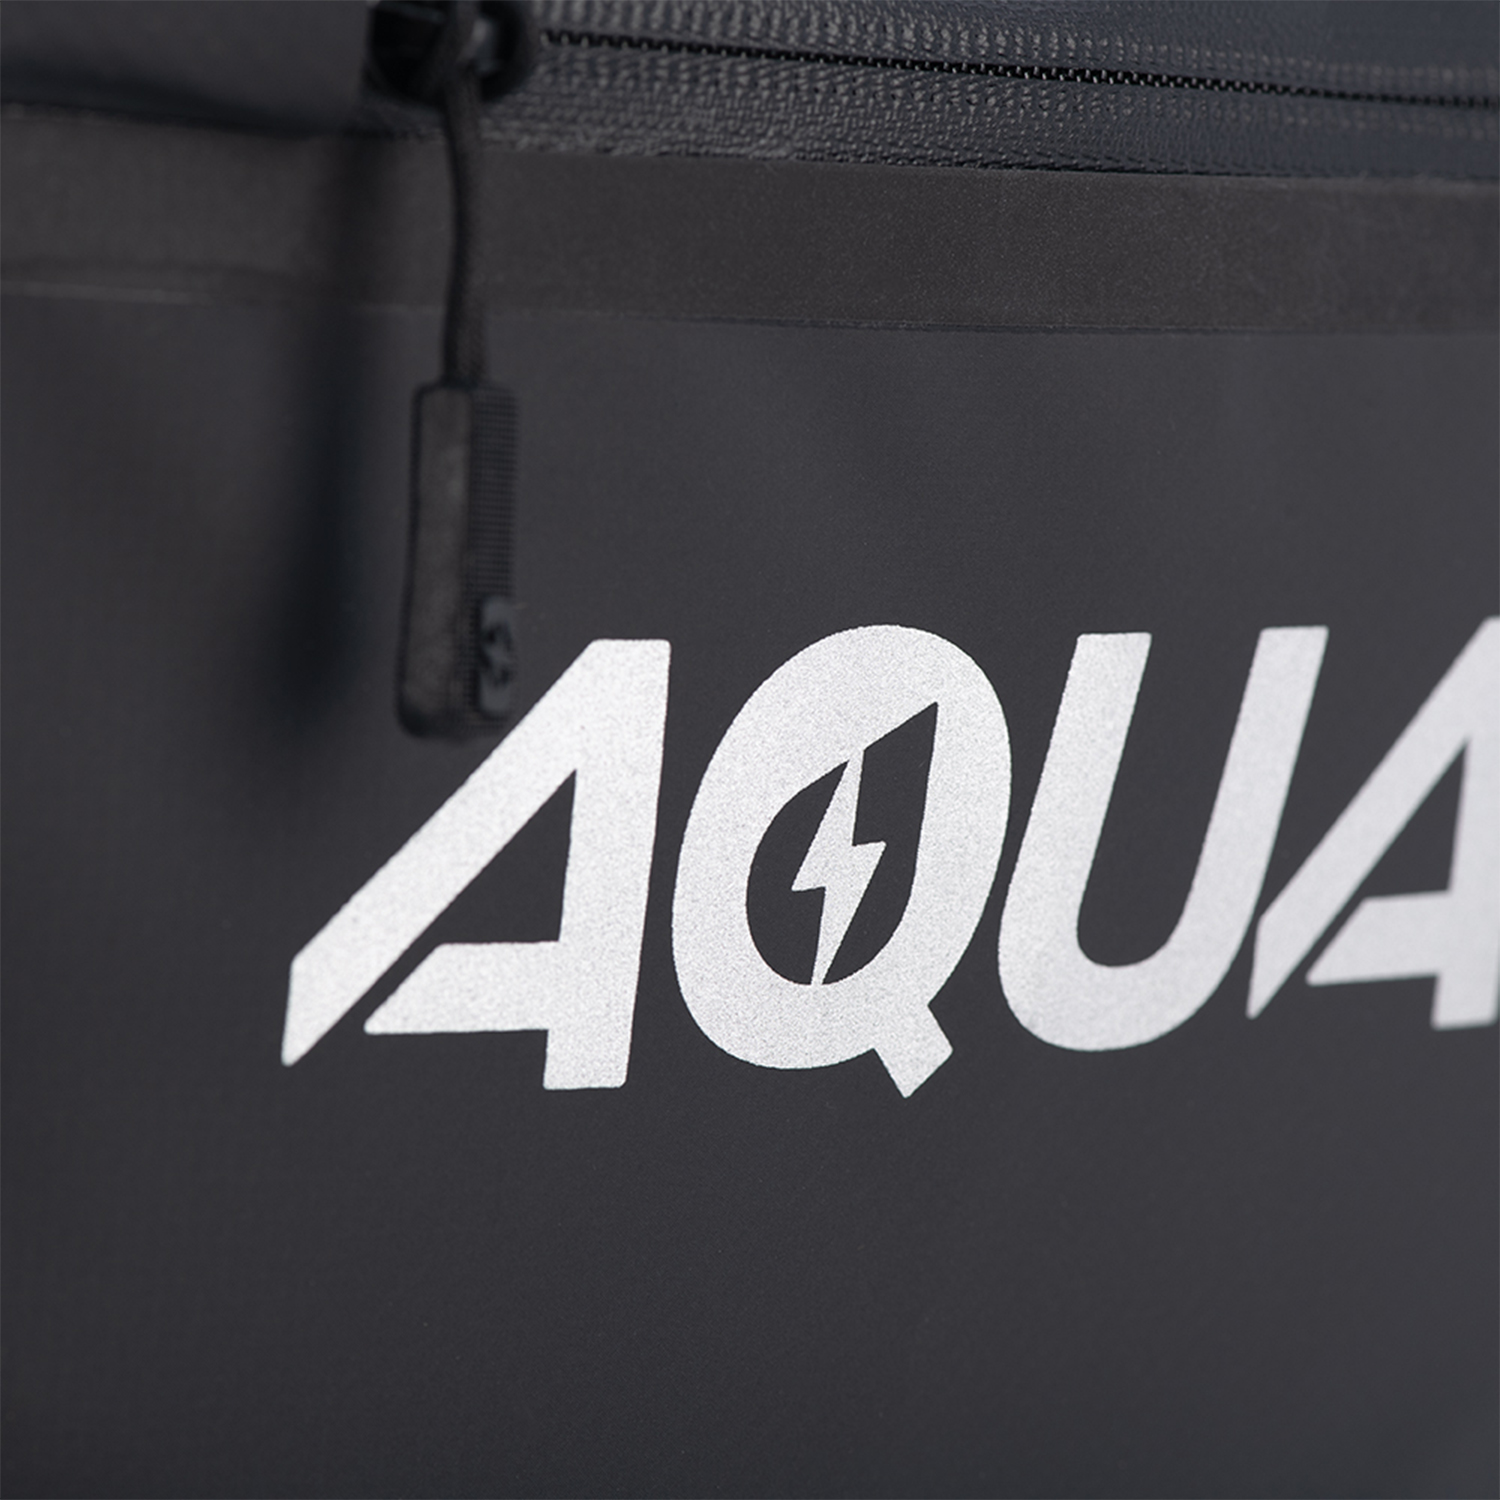 Велосумка Oxford Aqua V 20 Single QR Pannier Bag Black